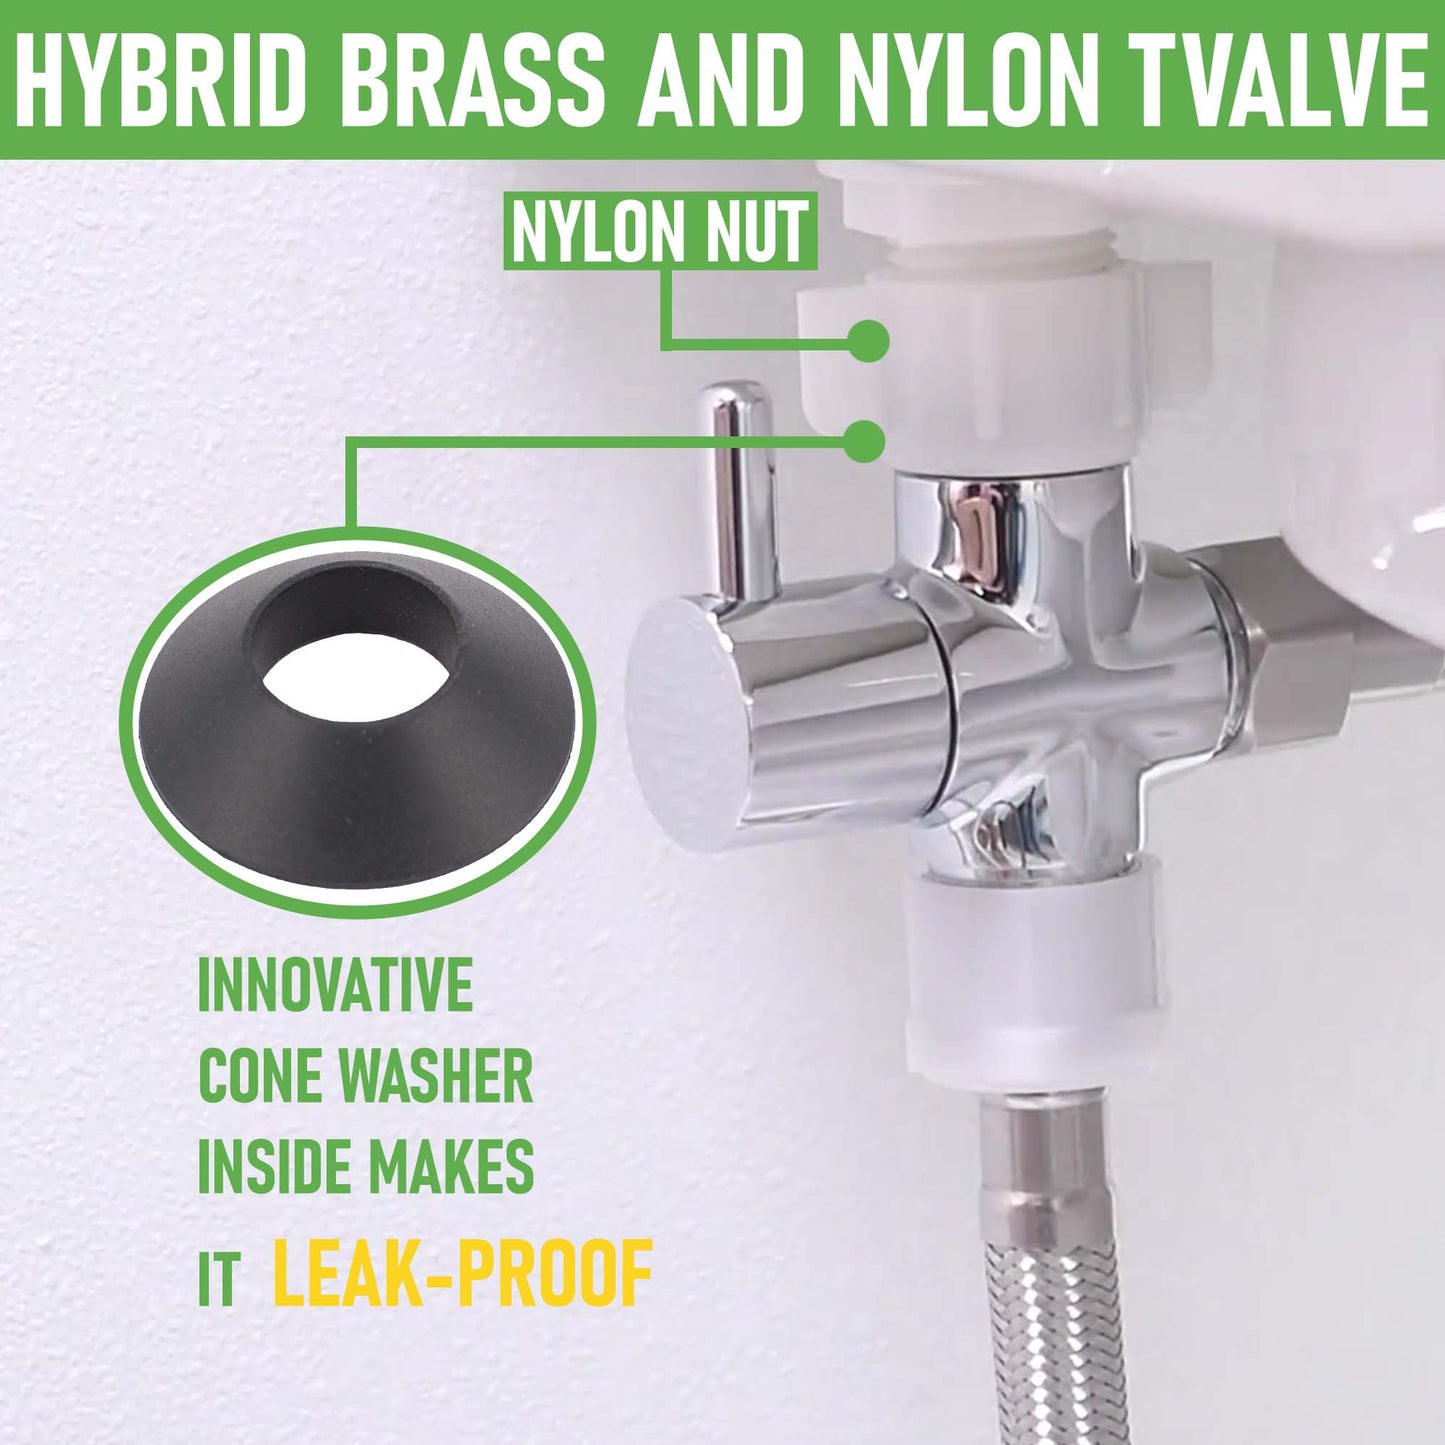 Hybrid brass and nylon tvalve